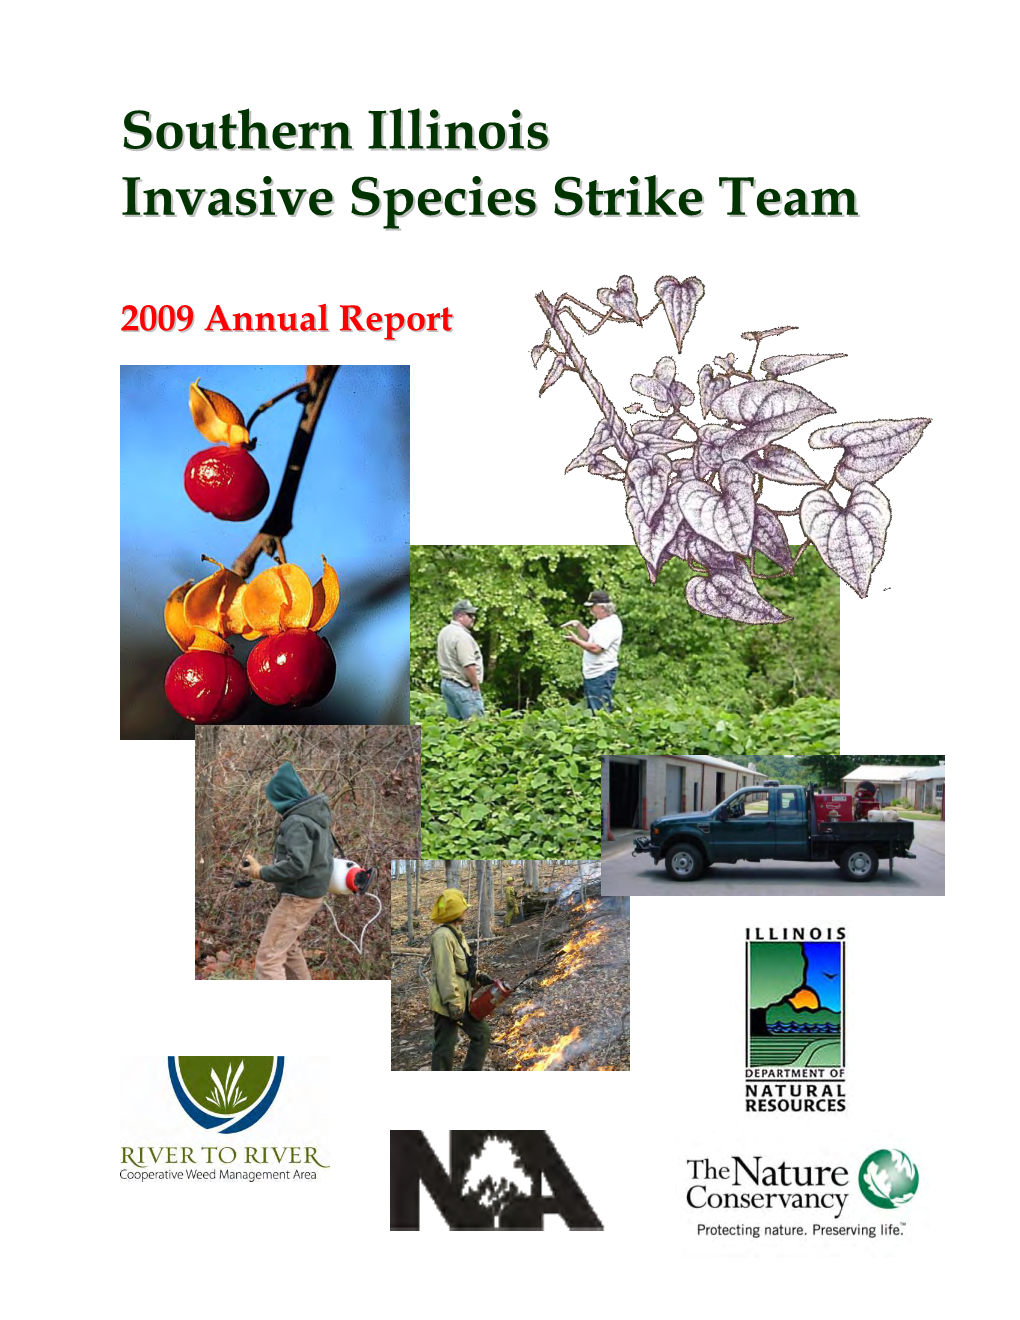 Southern Illinois Invasive Species Strike Team 2009 Annual Report